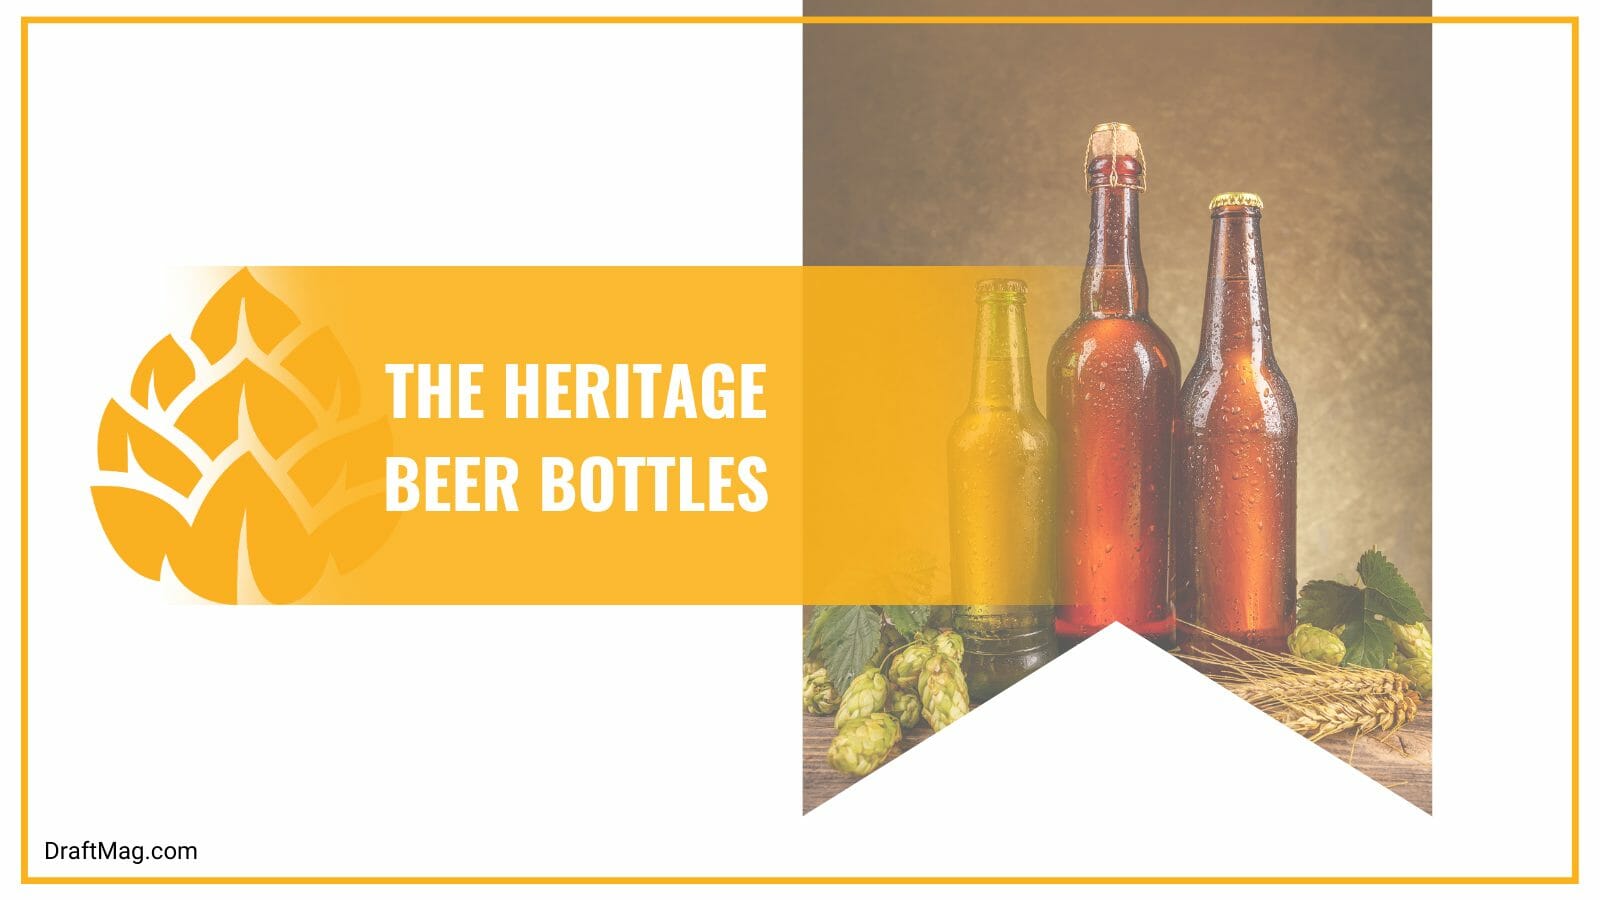 The Heritage Beer Bottles